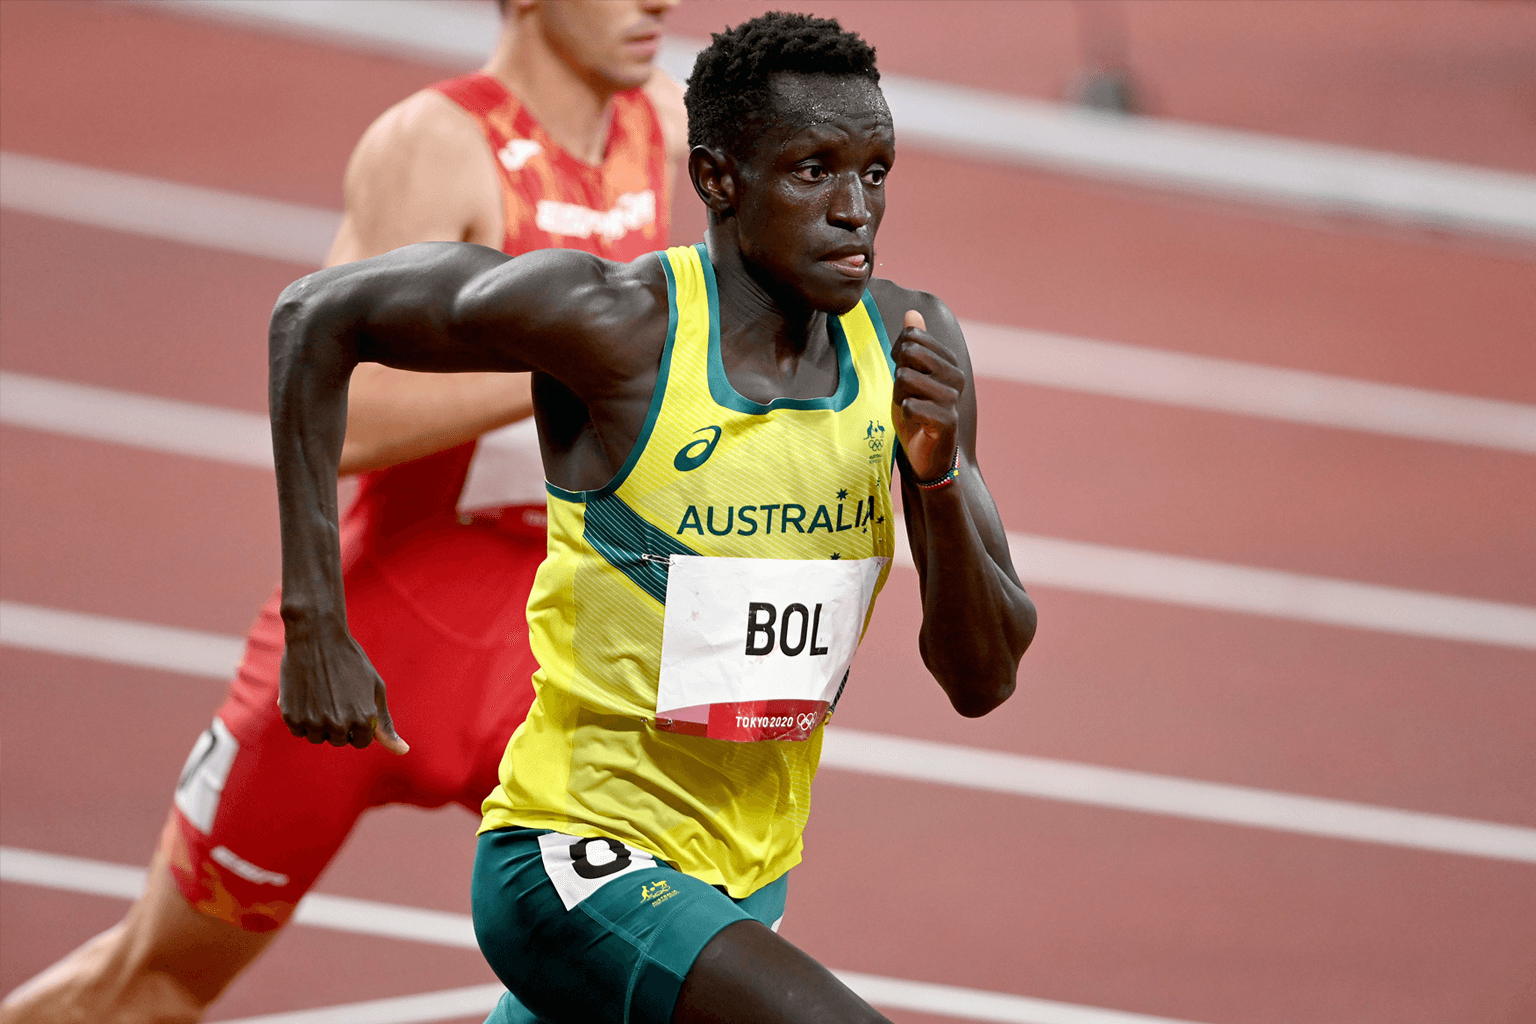 Australian 800m runner Peter Bol running at the Tokyo Olympic Stadium, wearing Australia's green and gold athletics uniform.